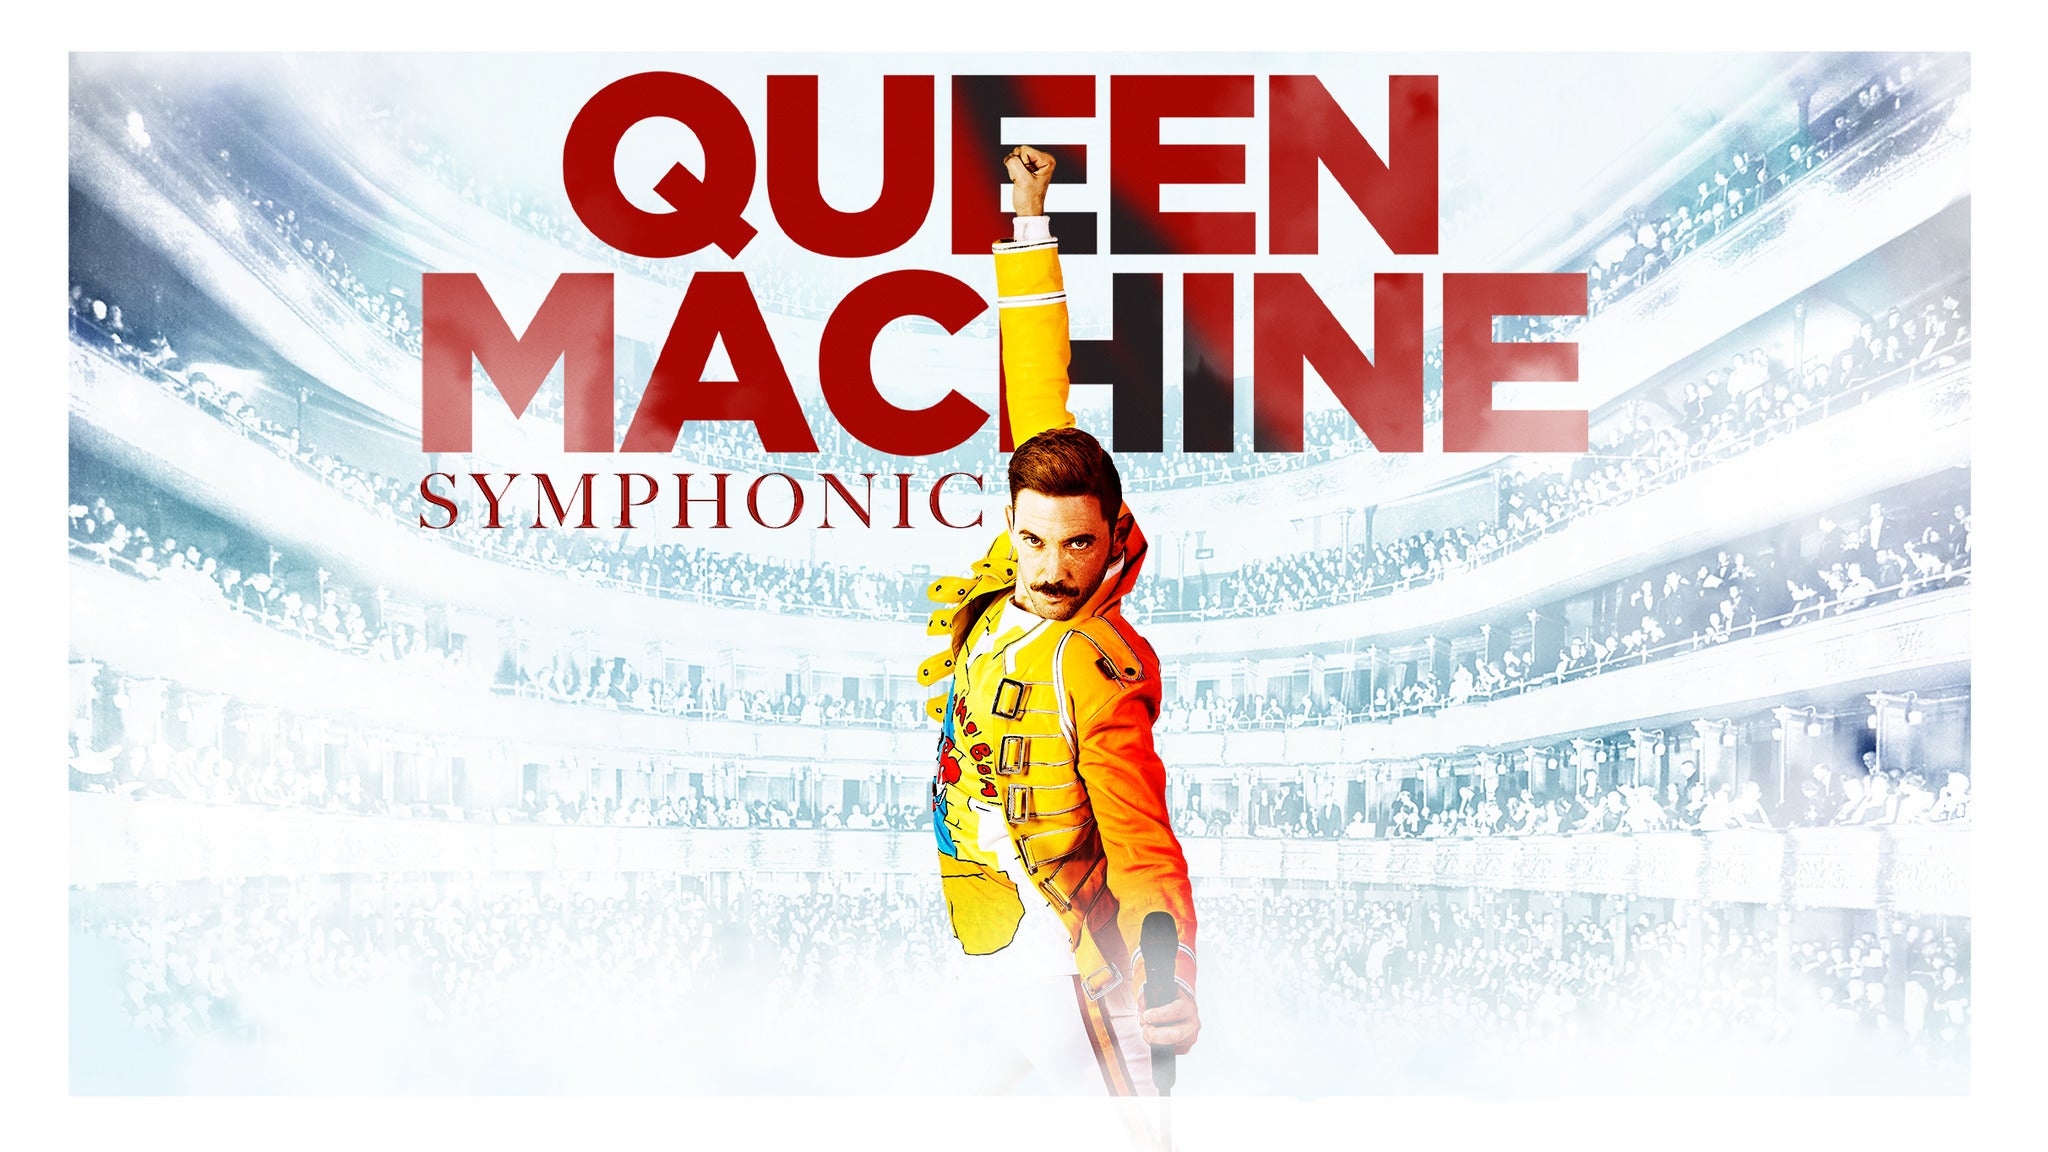 Queen Machine Symphonic featuring Kerry Ellis Event Title Pic